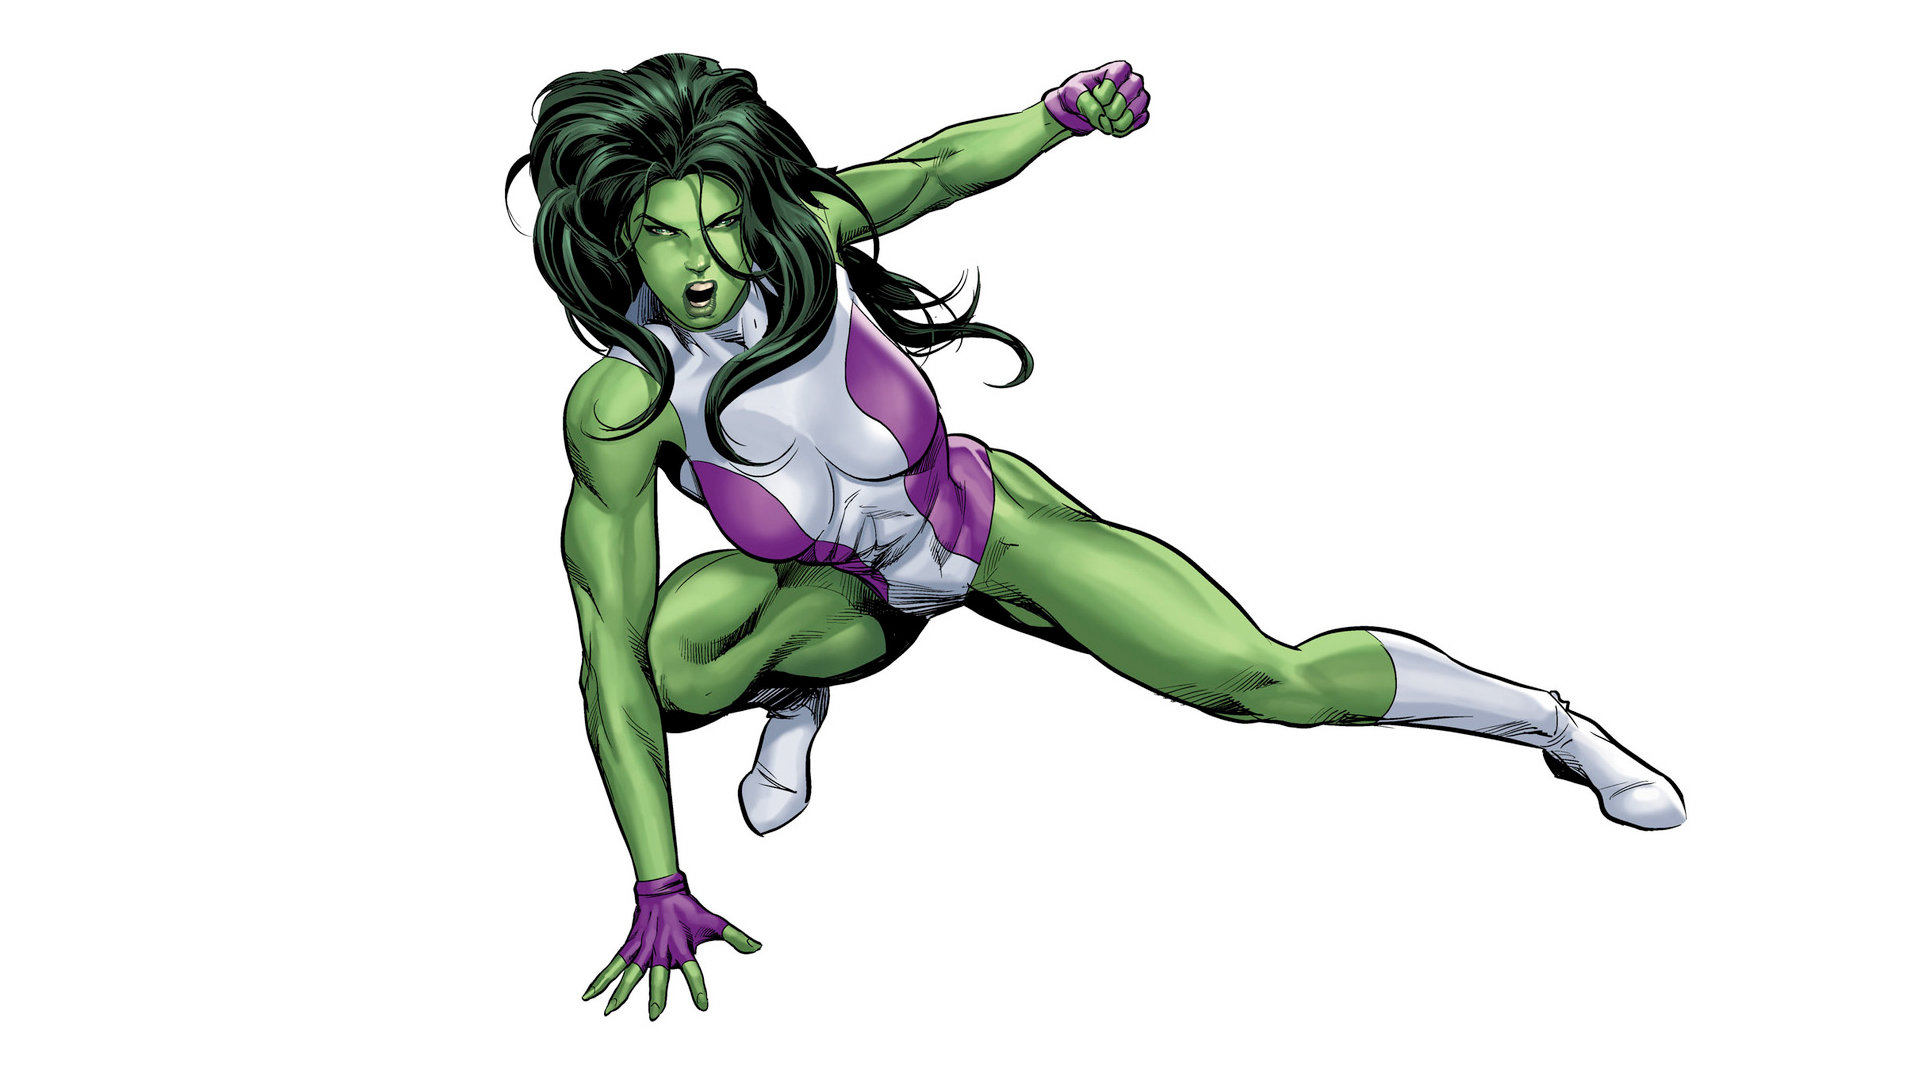 Best She-Hulk wallpaper ID:162028 for High Resolution full hd 1080p computer